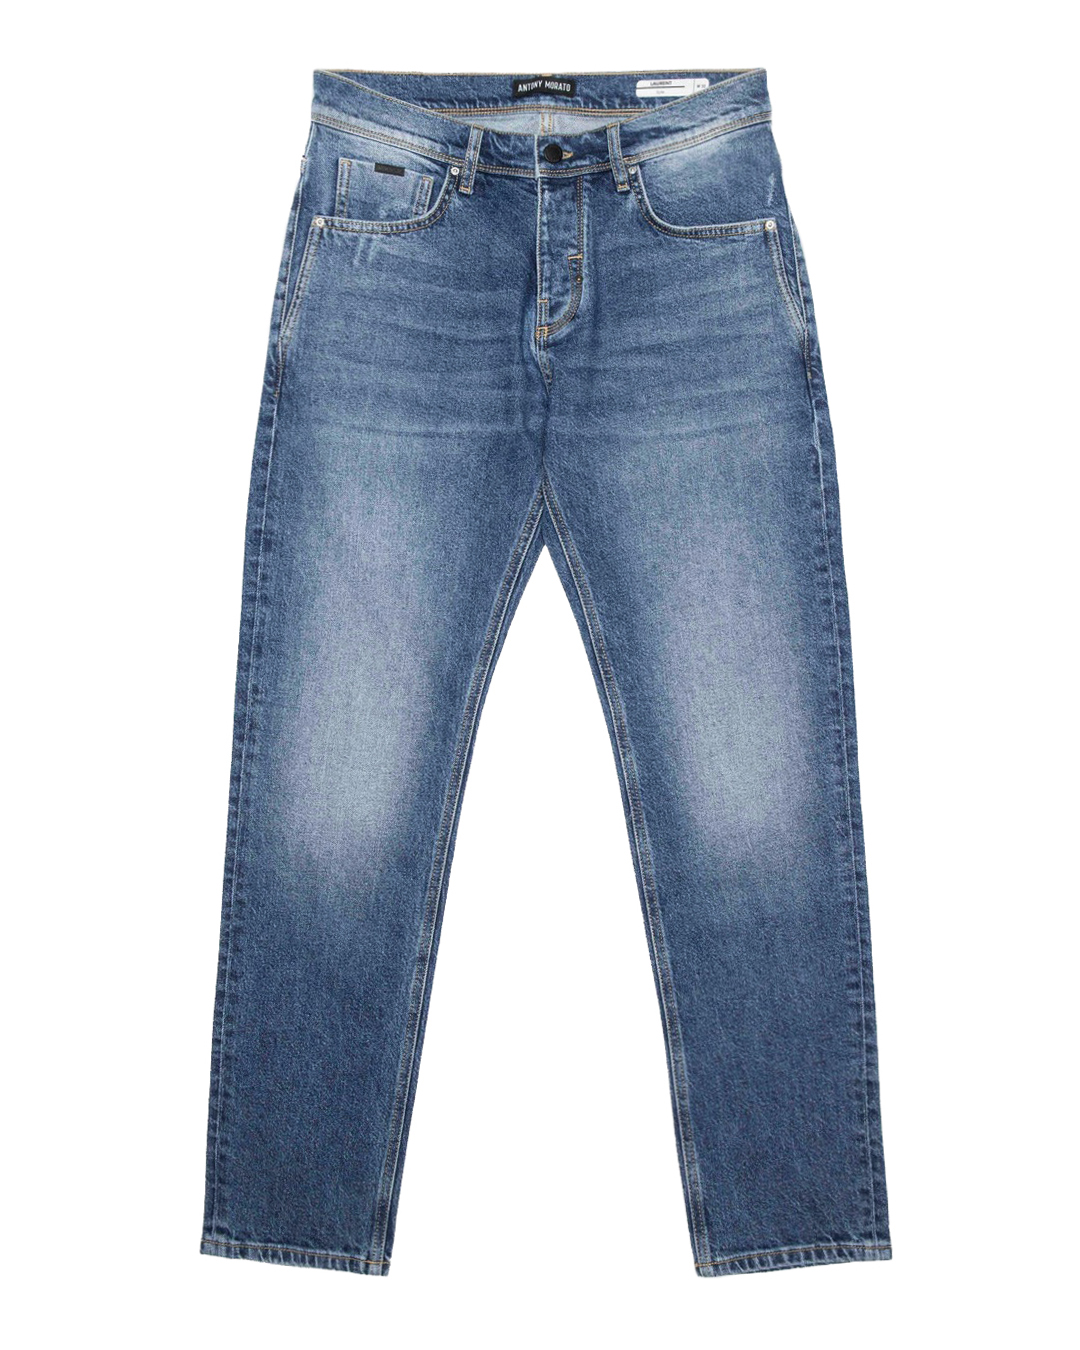 джинсы Antony Morato 275-FA750475-W01763 синий 31, размер 31 - фото 1